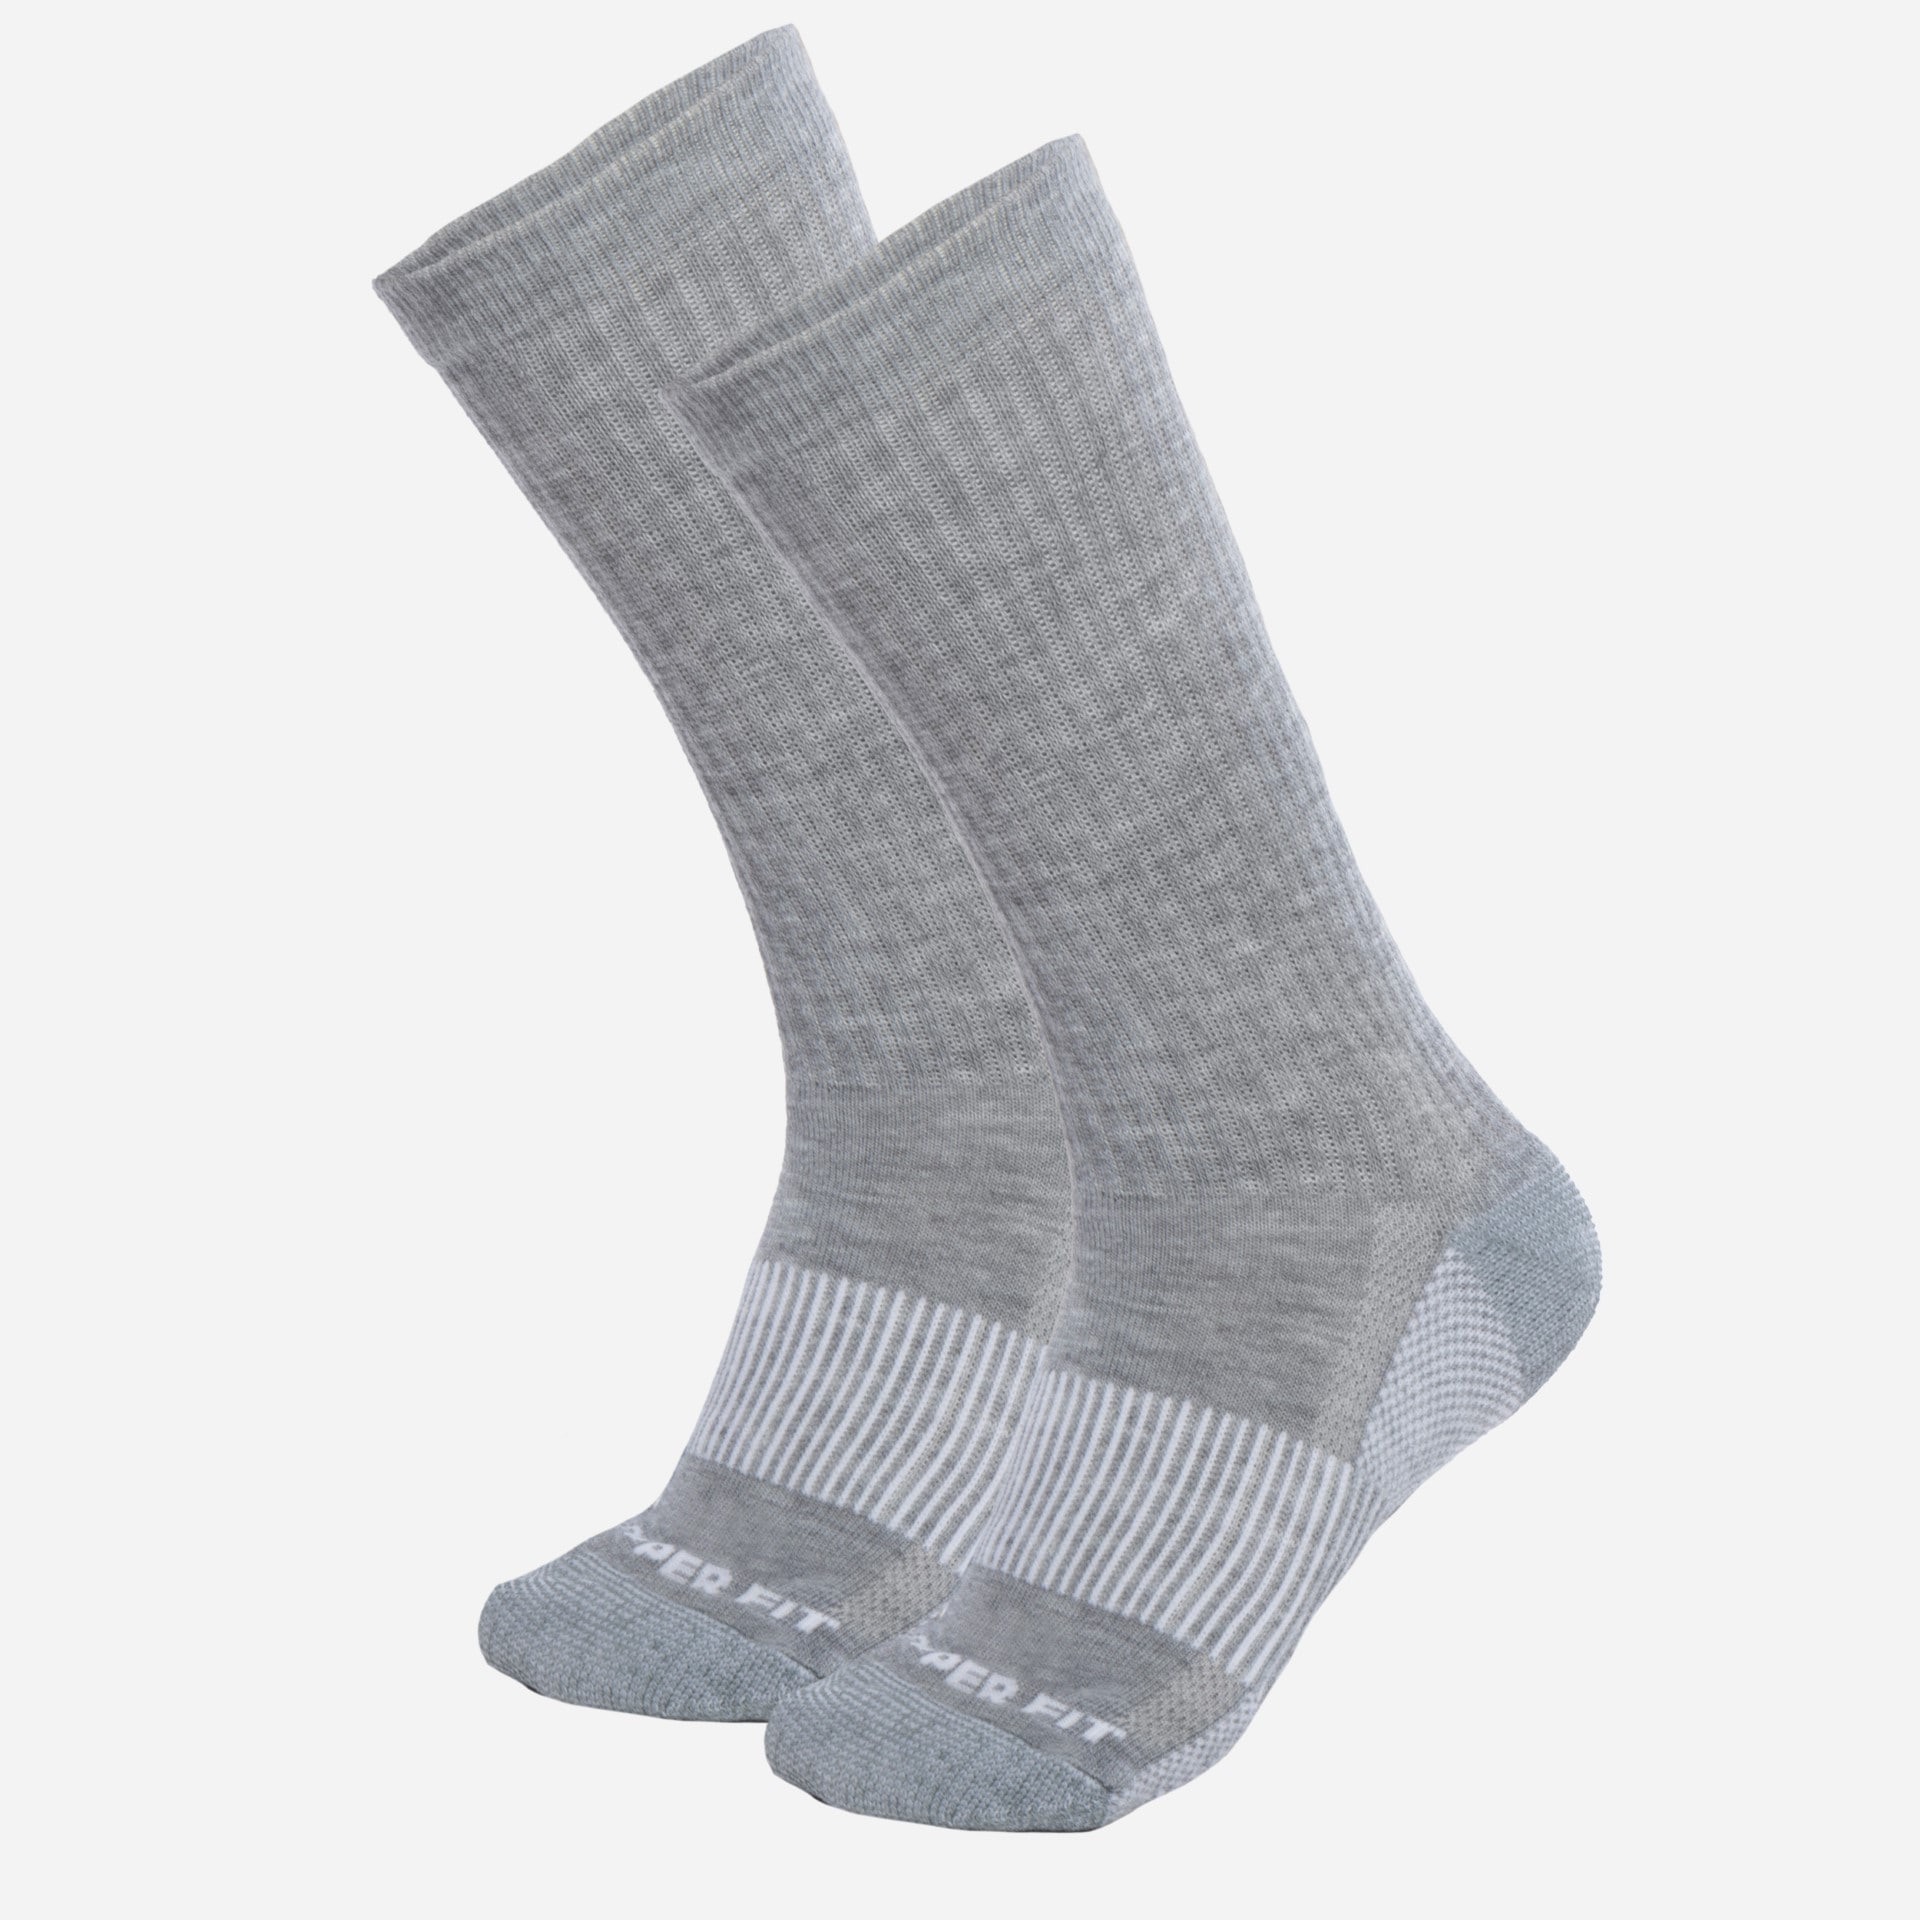 Copper Fit Socks at Lowes.com